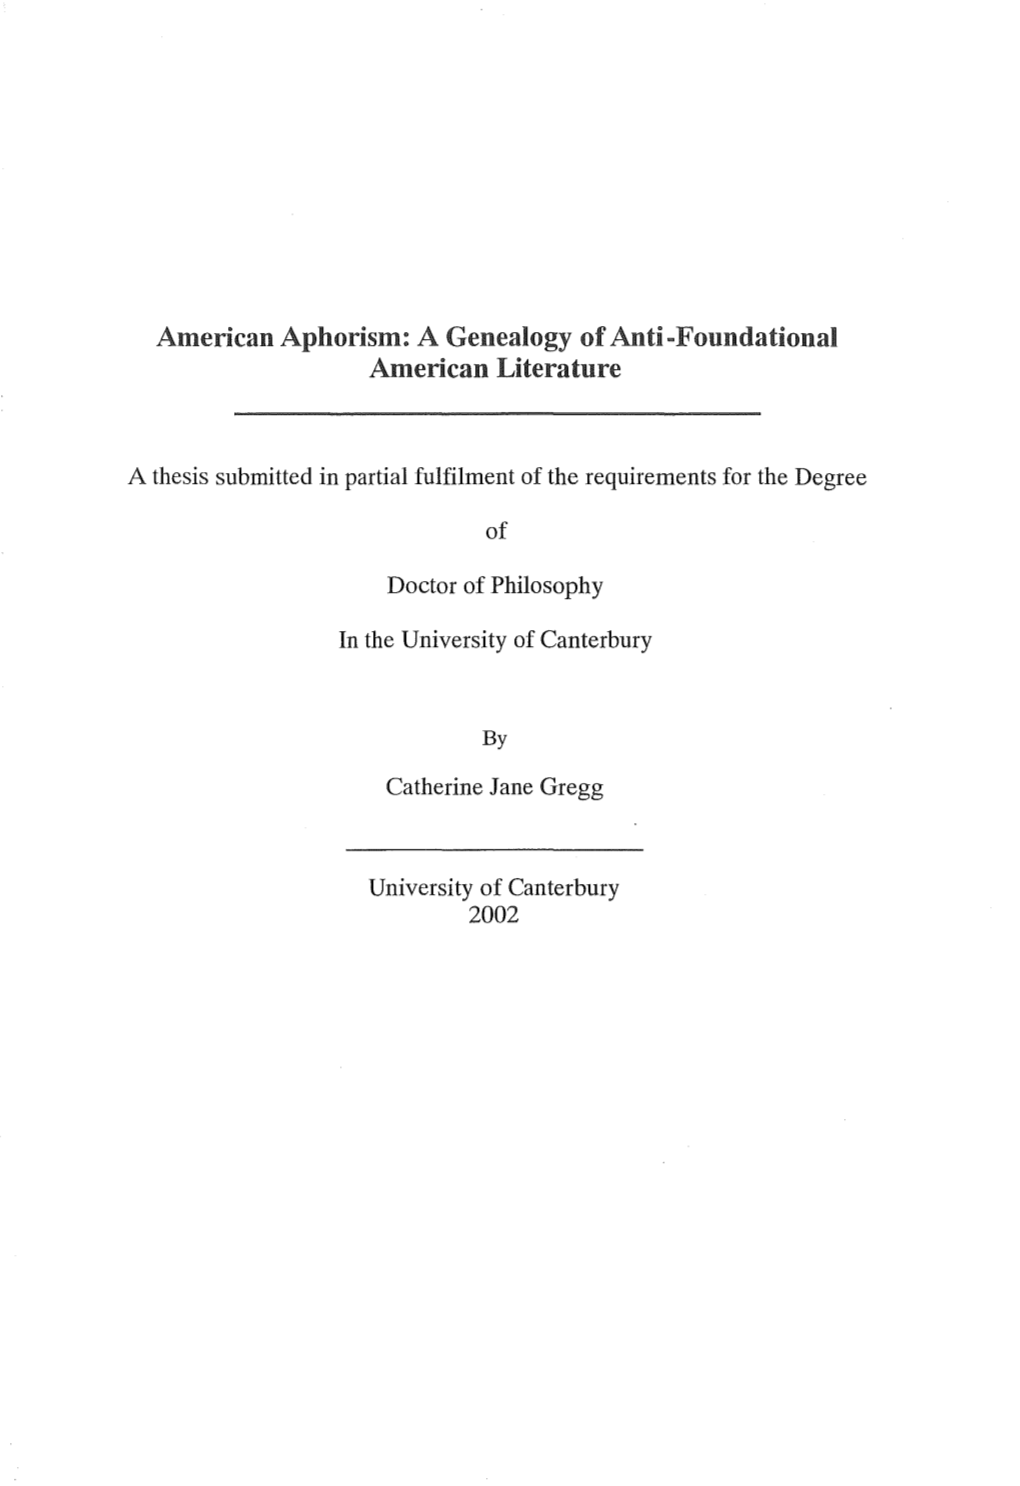 American Aphorism: a Genealogy of Antimfoundational American Literature